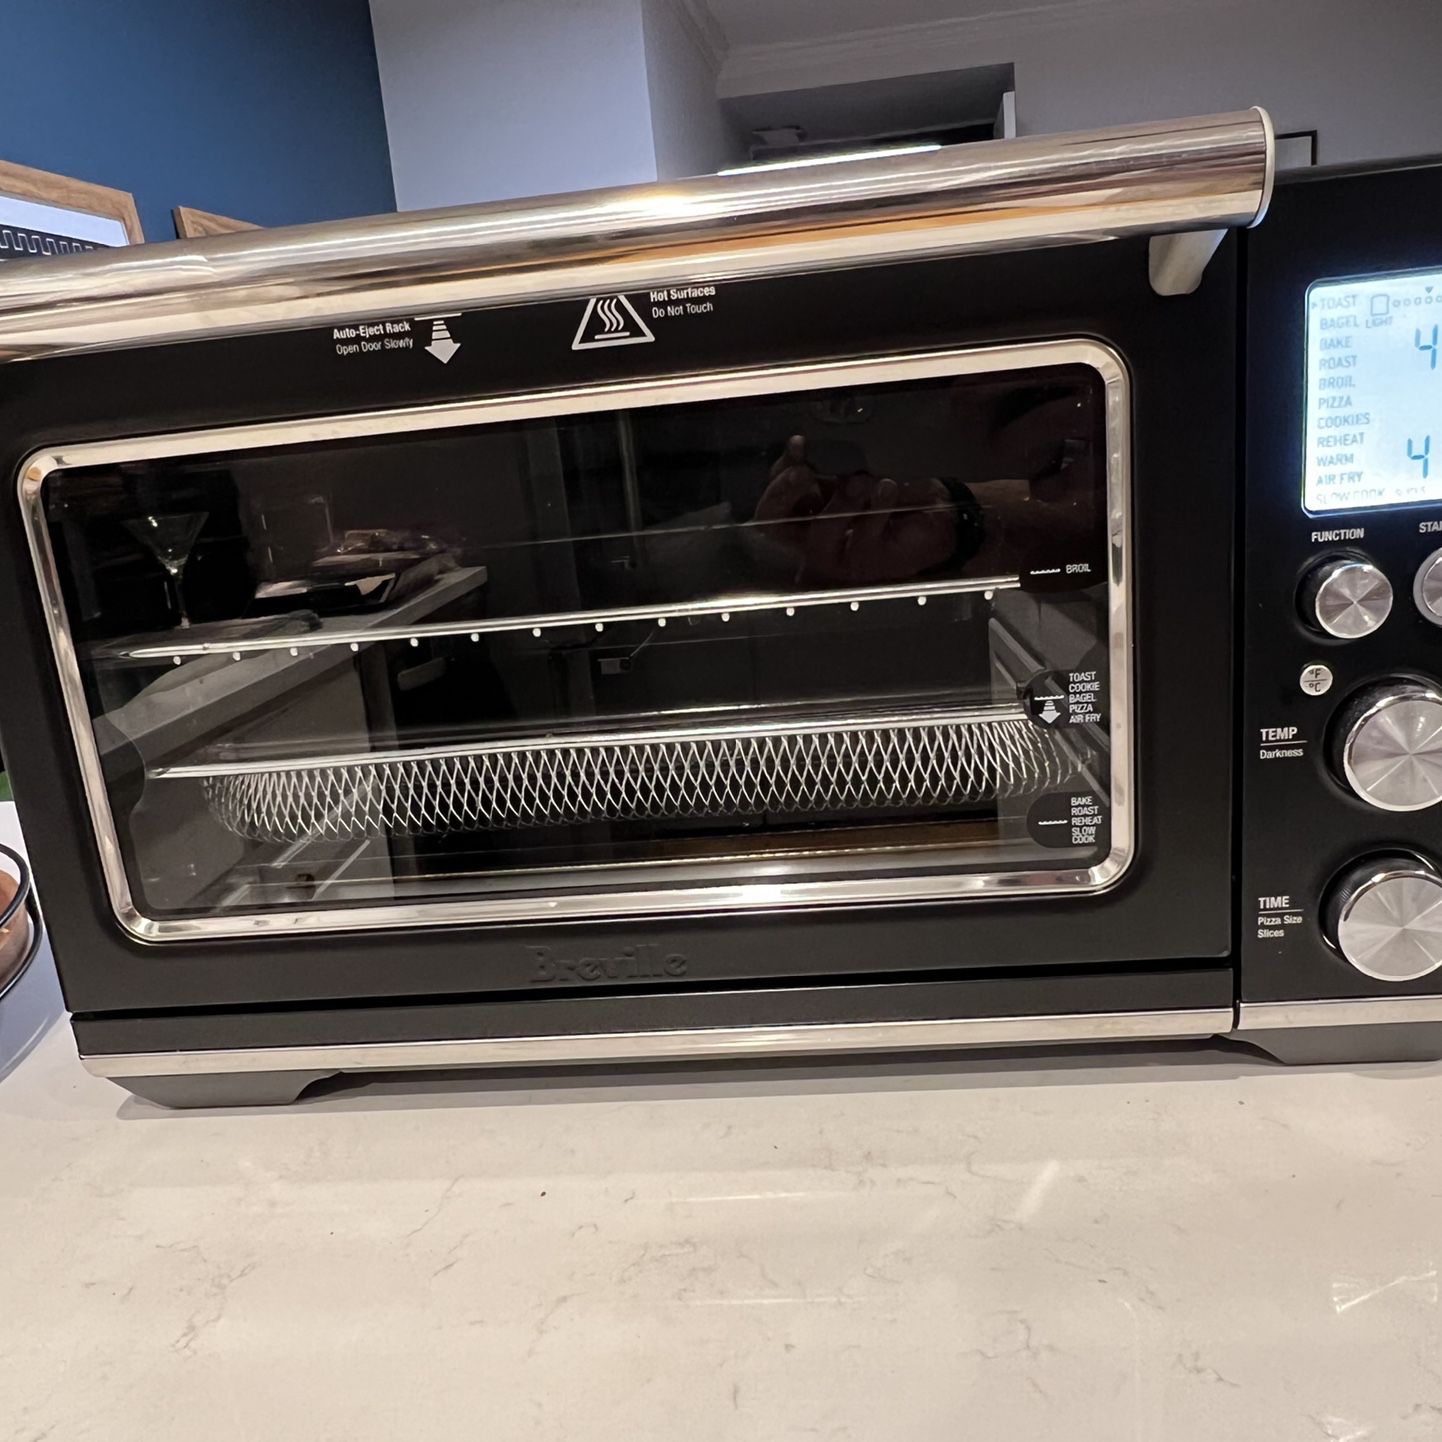 Breville Black Truffle Smart Oven Air Fryer